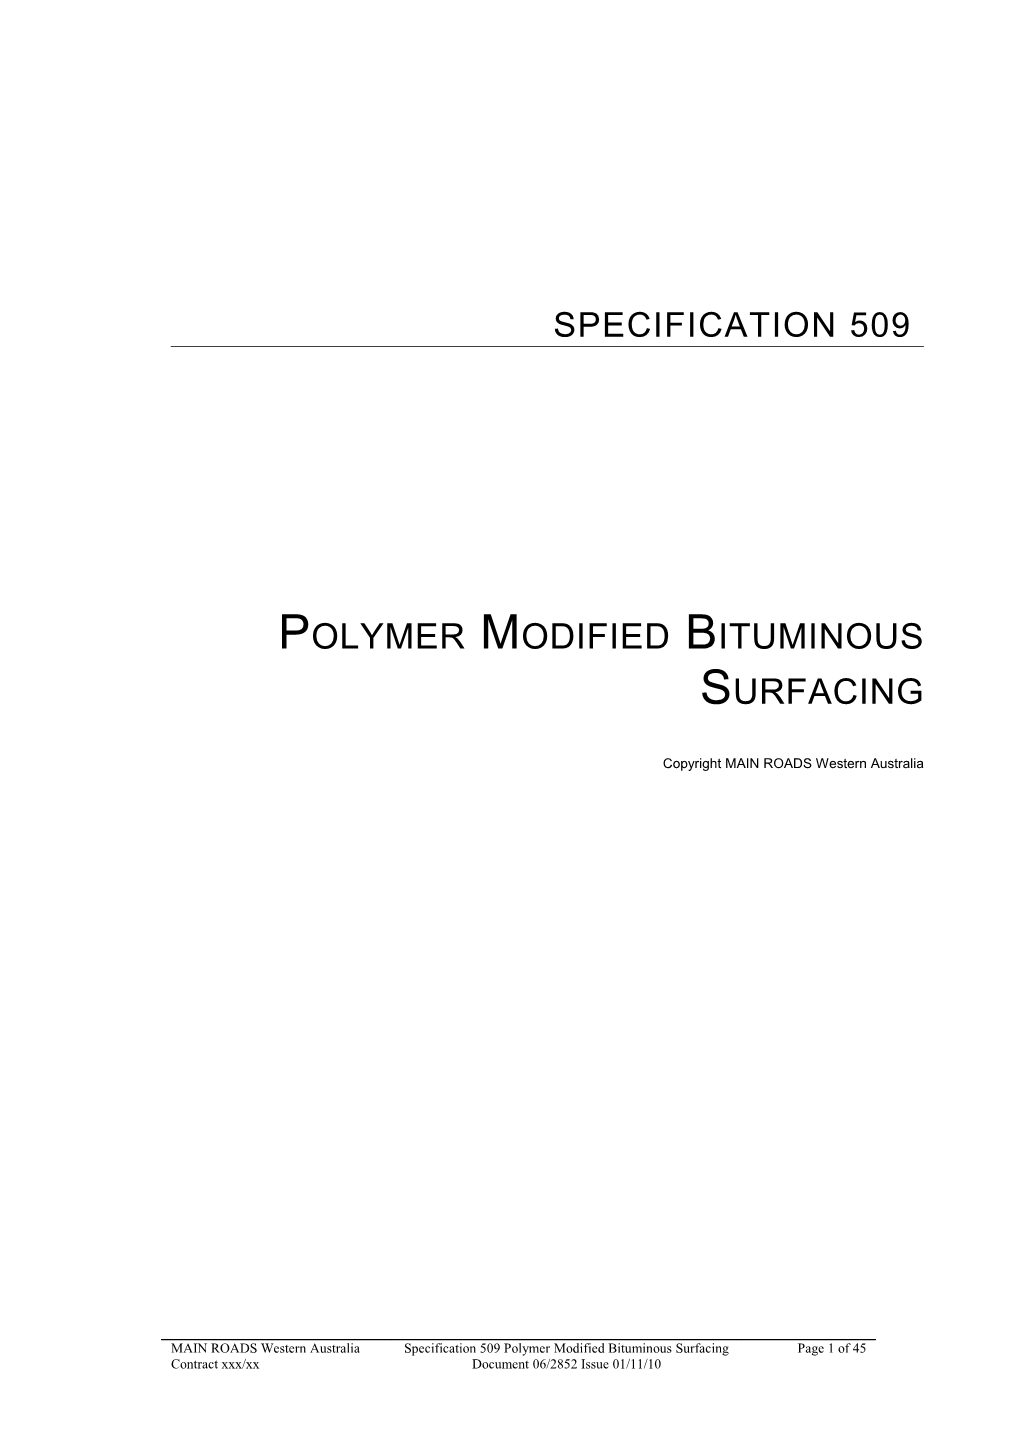 Polymer Modified Bituminous Surfacing